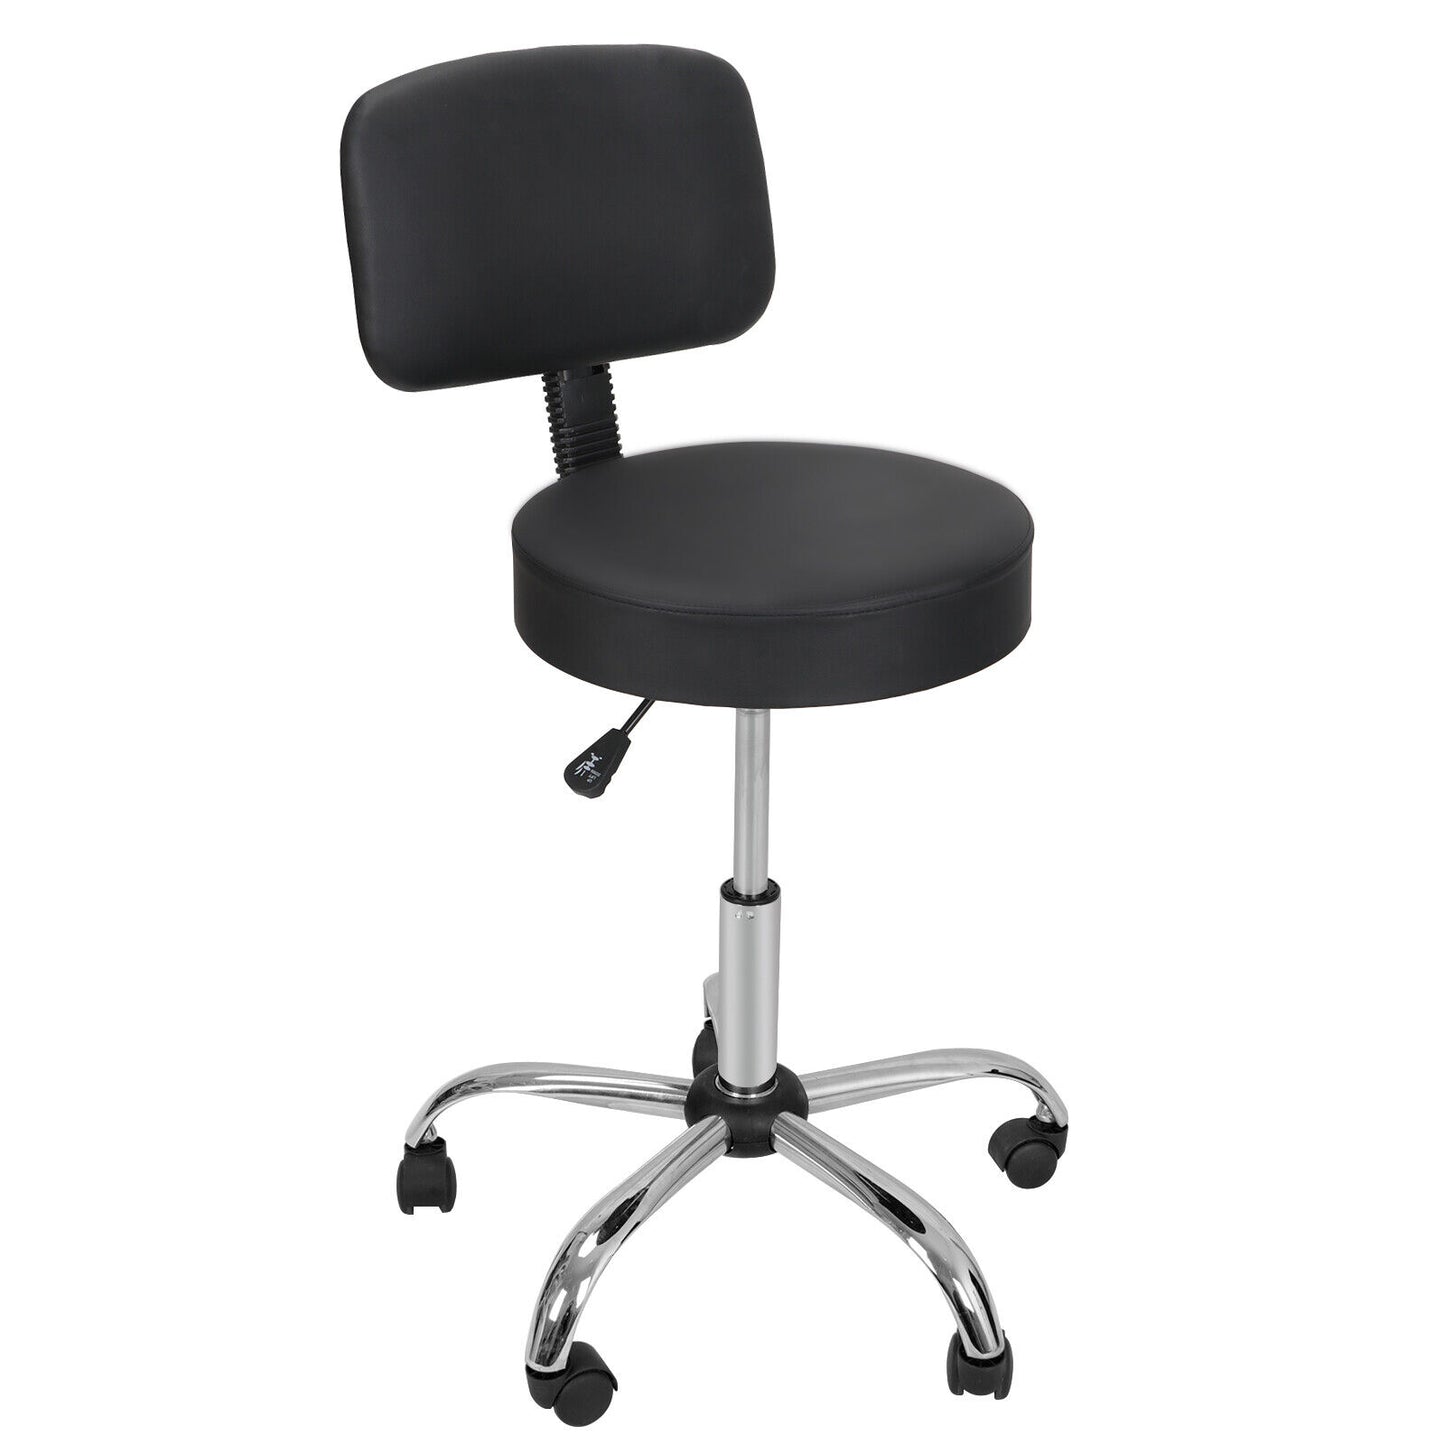 Adjustable Hydraulic Rolling Swivel Massage Spa Salon Stool Chair w/Back Rest